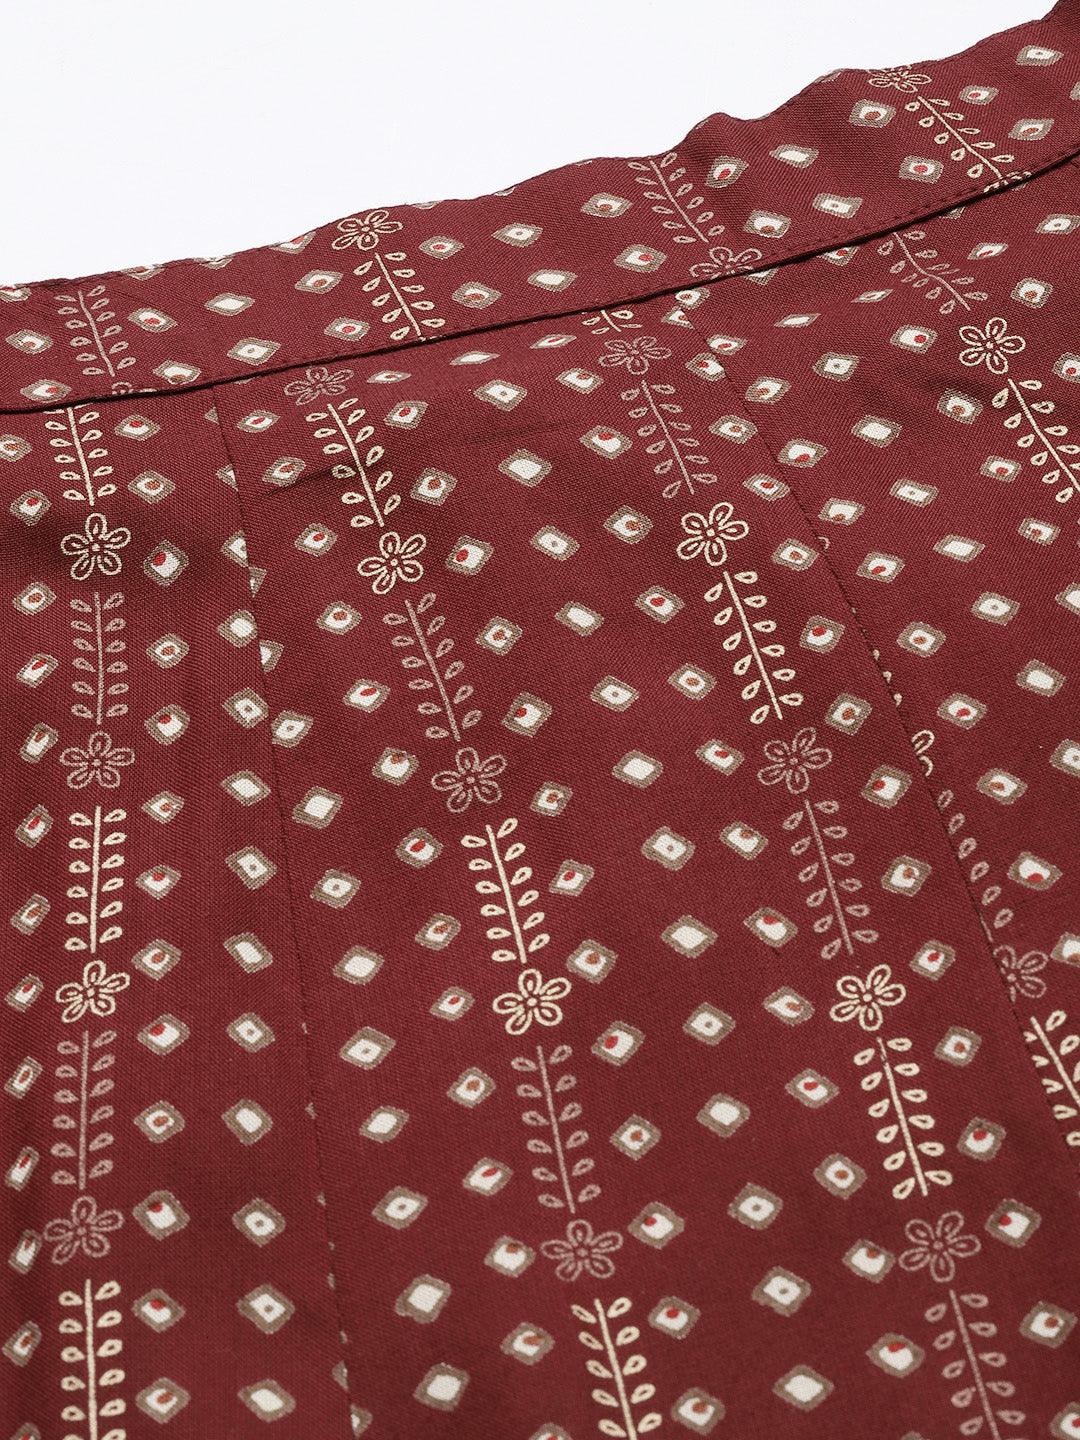 Maroon Printed Rayon Skirt - Libas